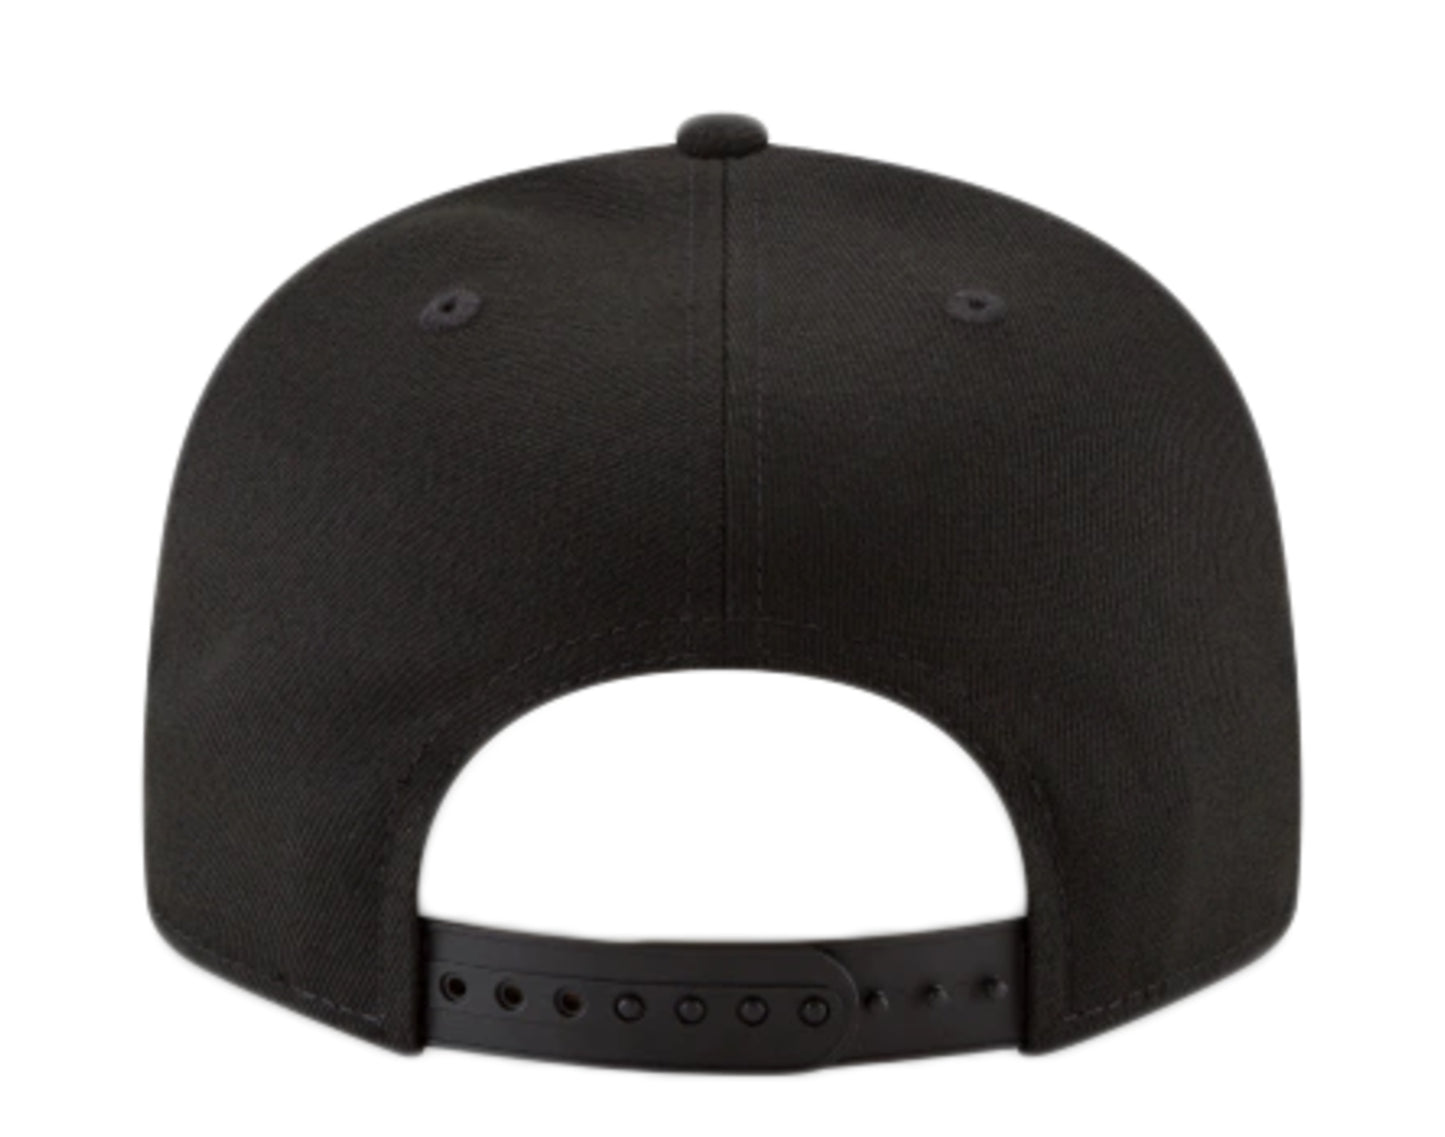 New Era 9Fifty MLB Chicago White Sox Basic Snapback Hat